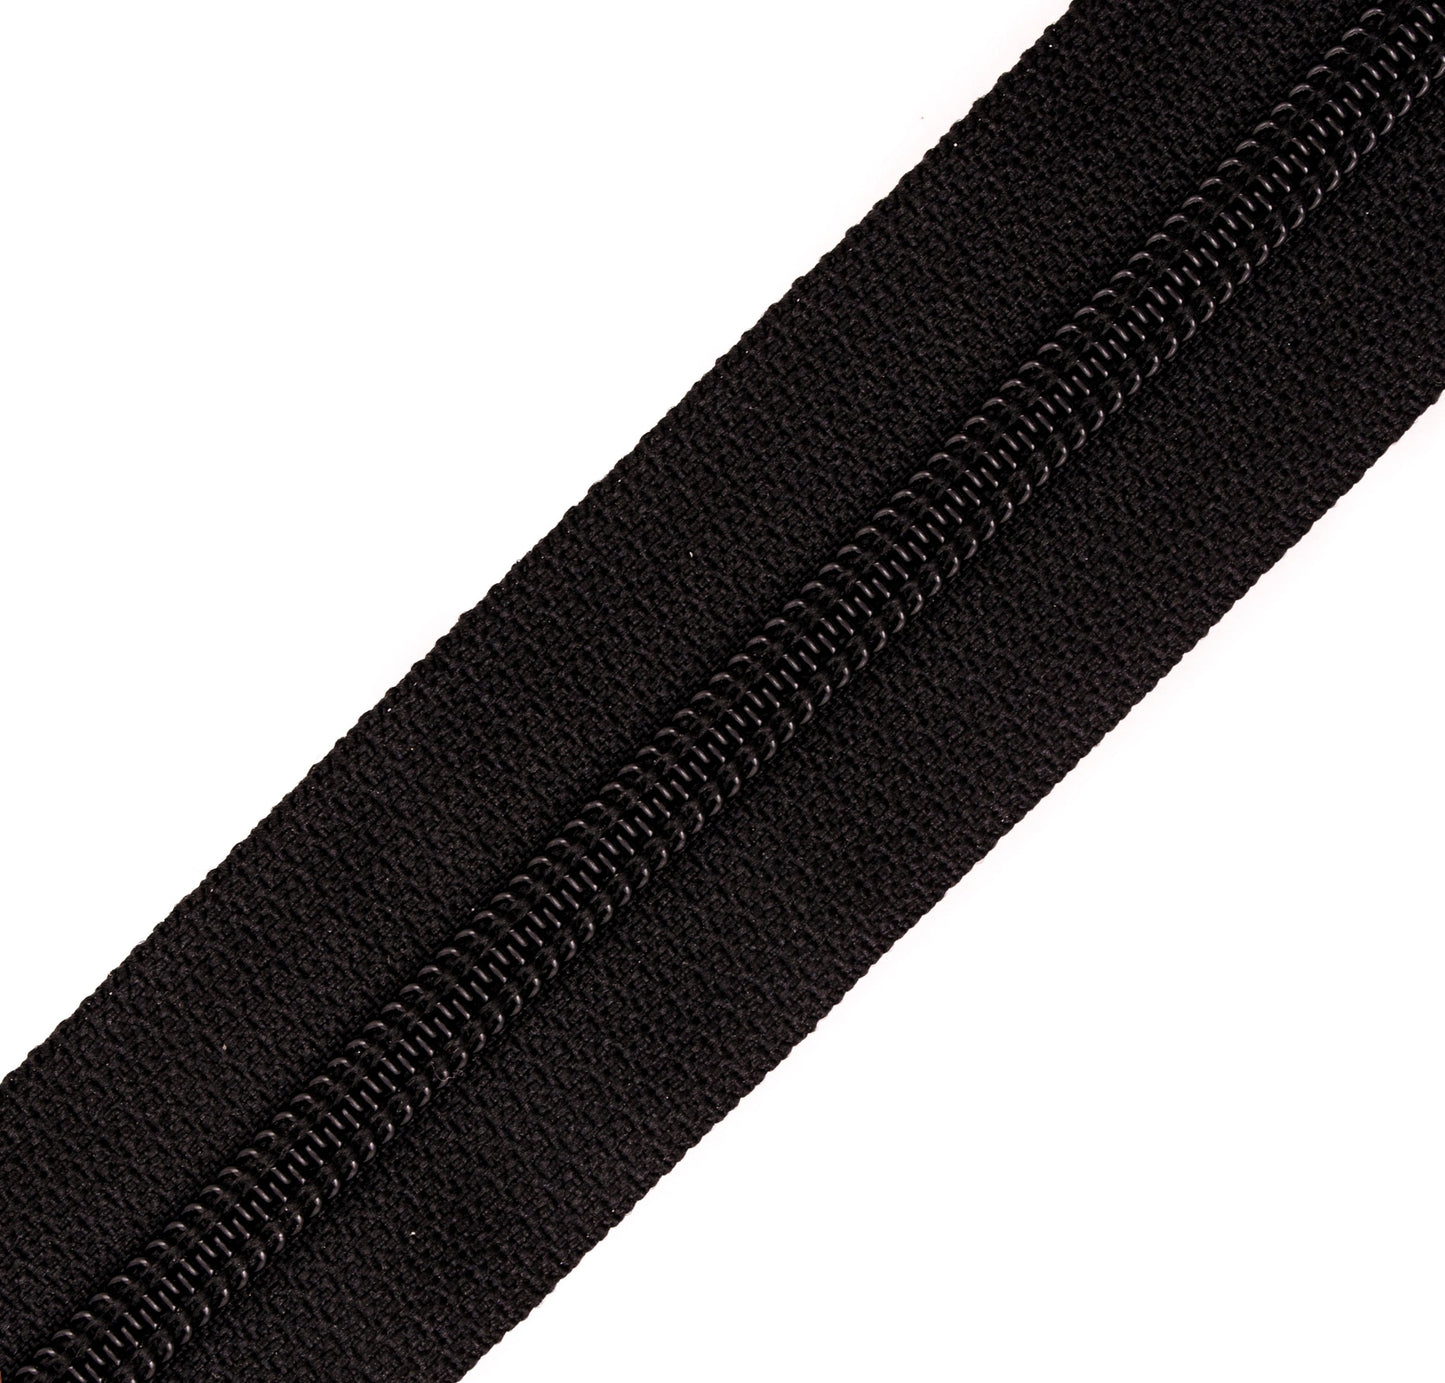 Coil YKK zipper 5RC (580) Black